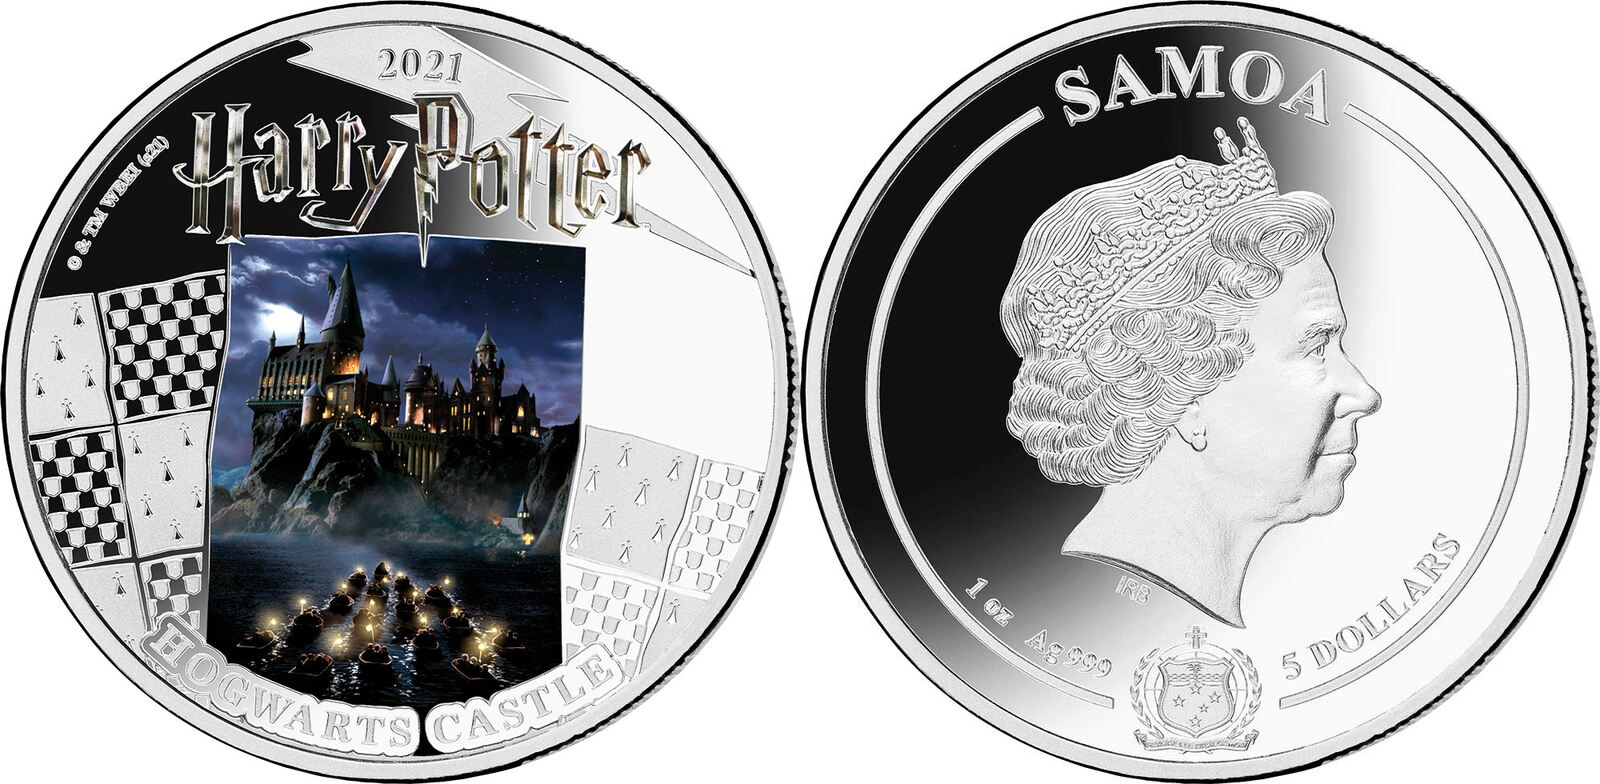 samoa-2021-harry-potter-chateau-de-hogwarts